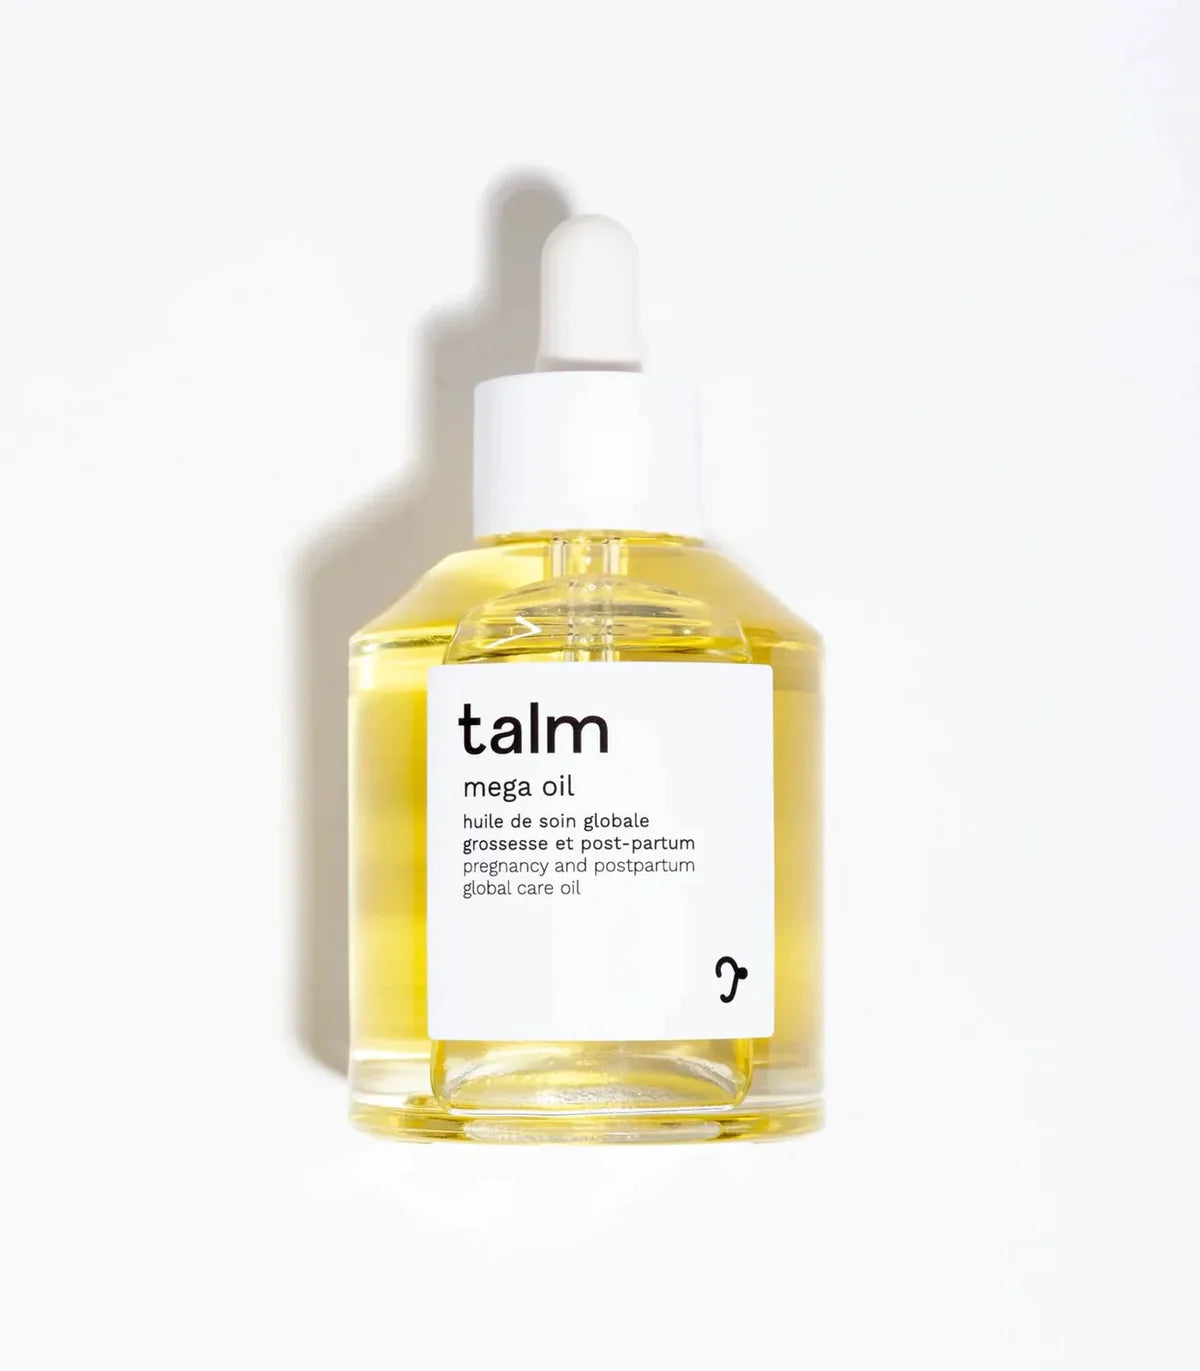 Talm - Mega oil - Huile de soin bio grossesse et post-partum - 100ml